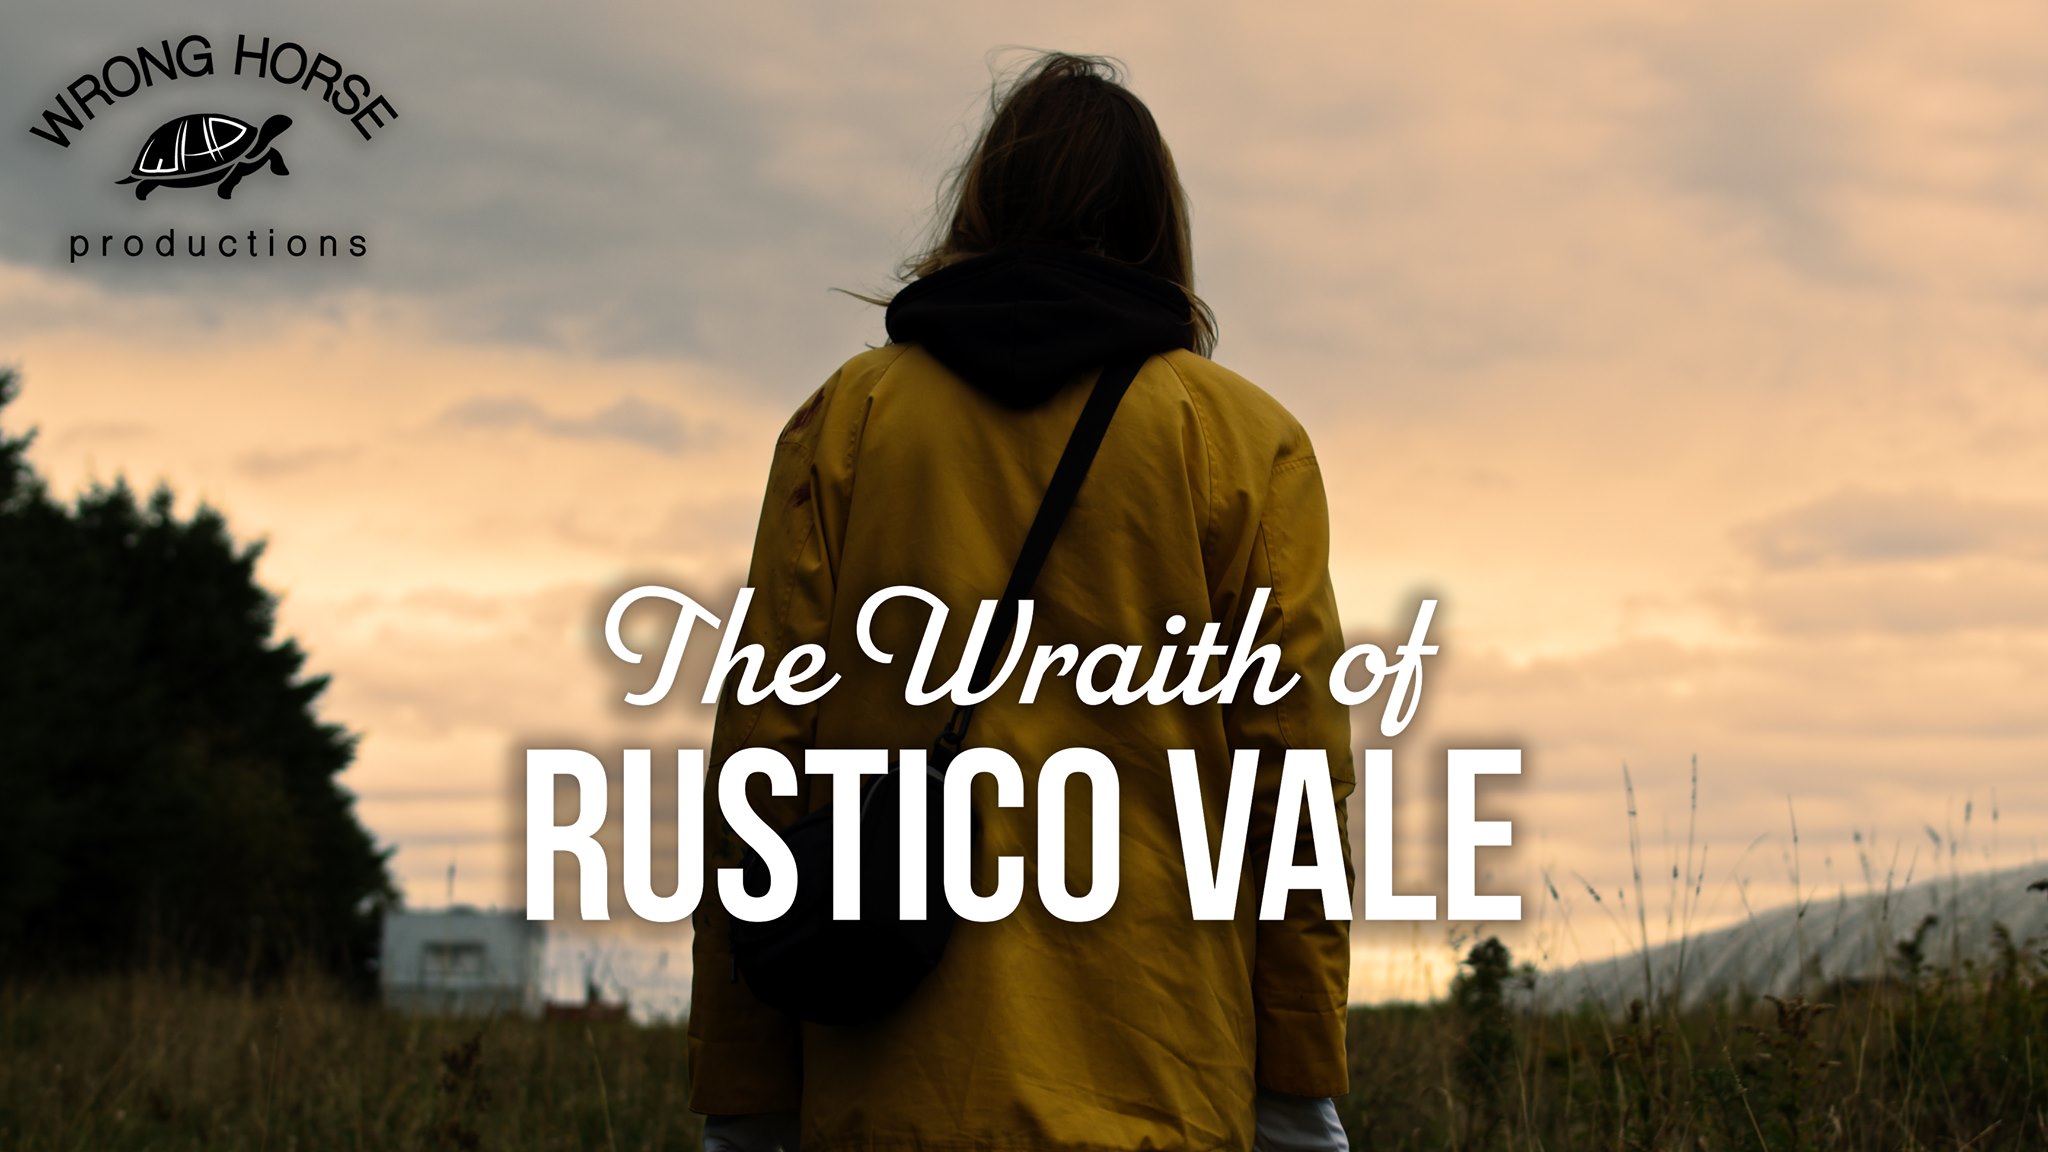 The Wraith of Rustico Vale Short Film